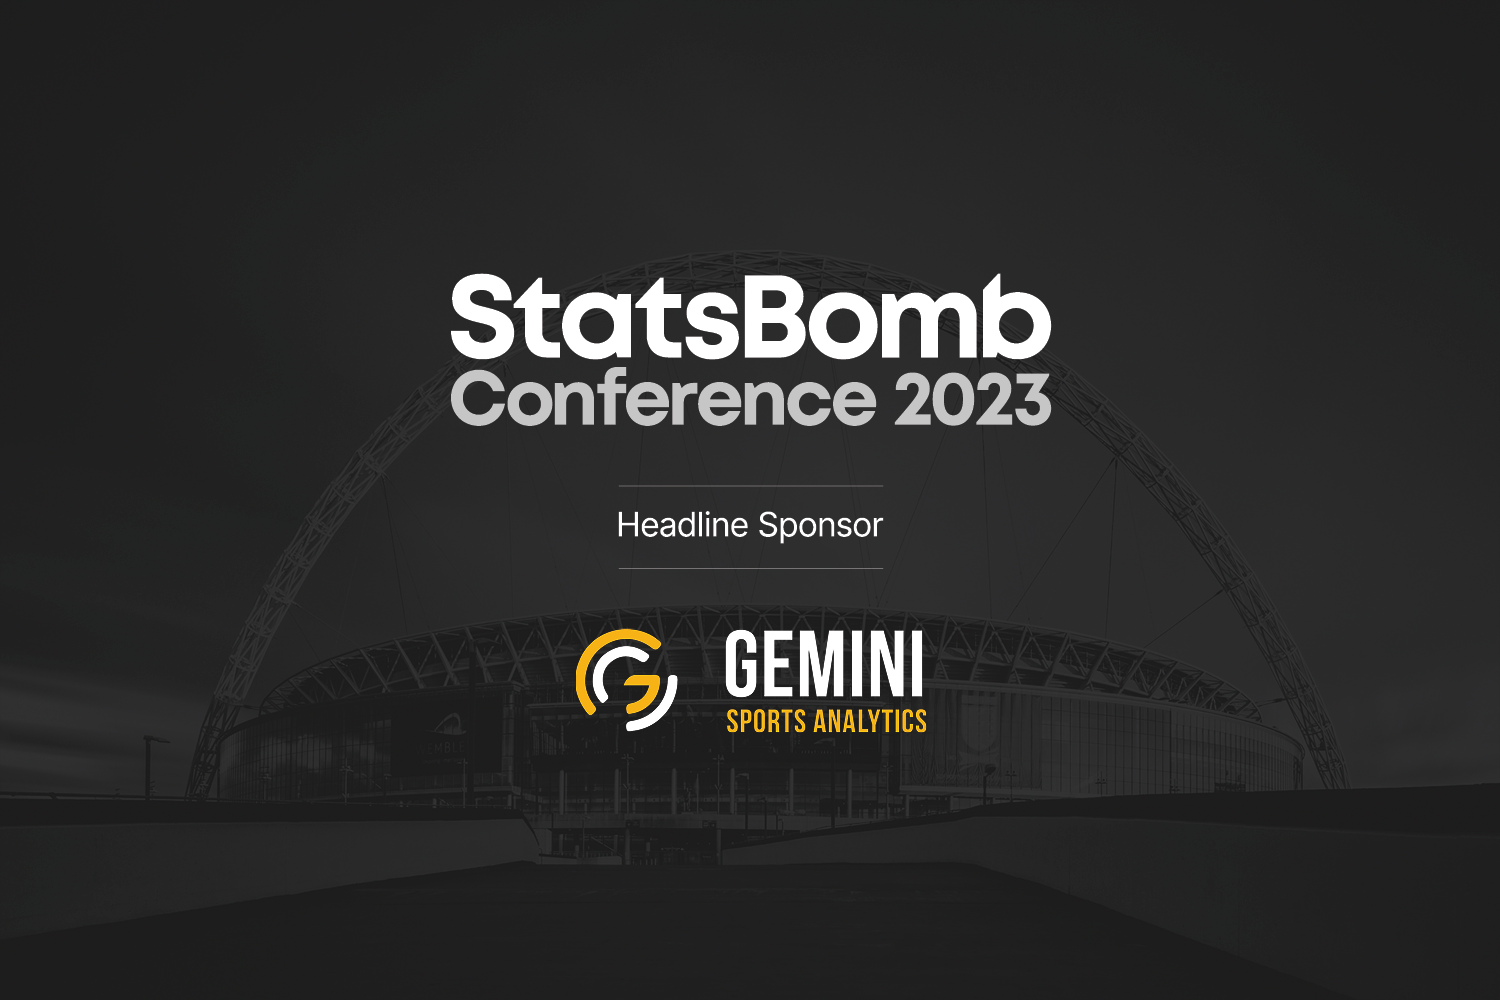 Gemini Sports Analytics Named as Launch Partner of StatsBomb Partnership Programme and Headline Sponsor of the 2023 StatsBomb Conference